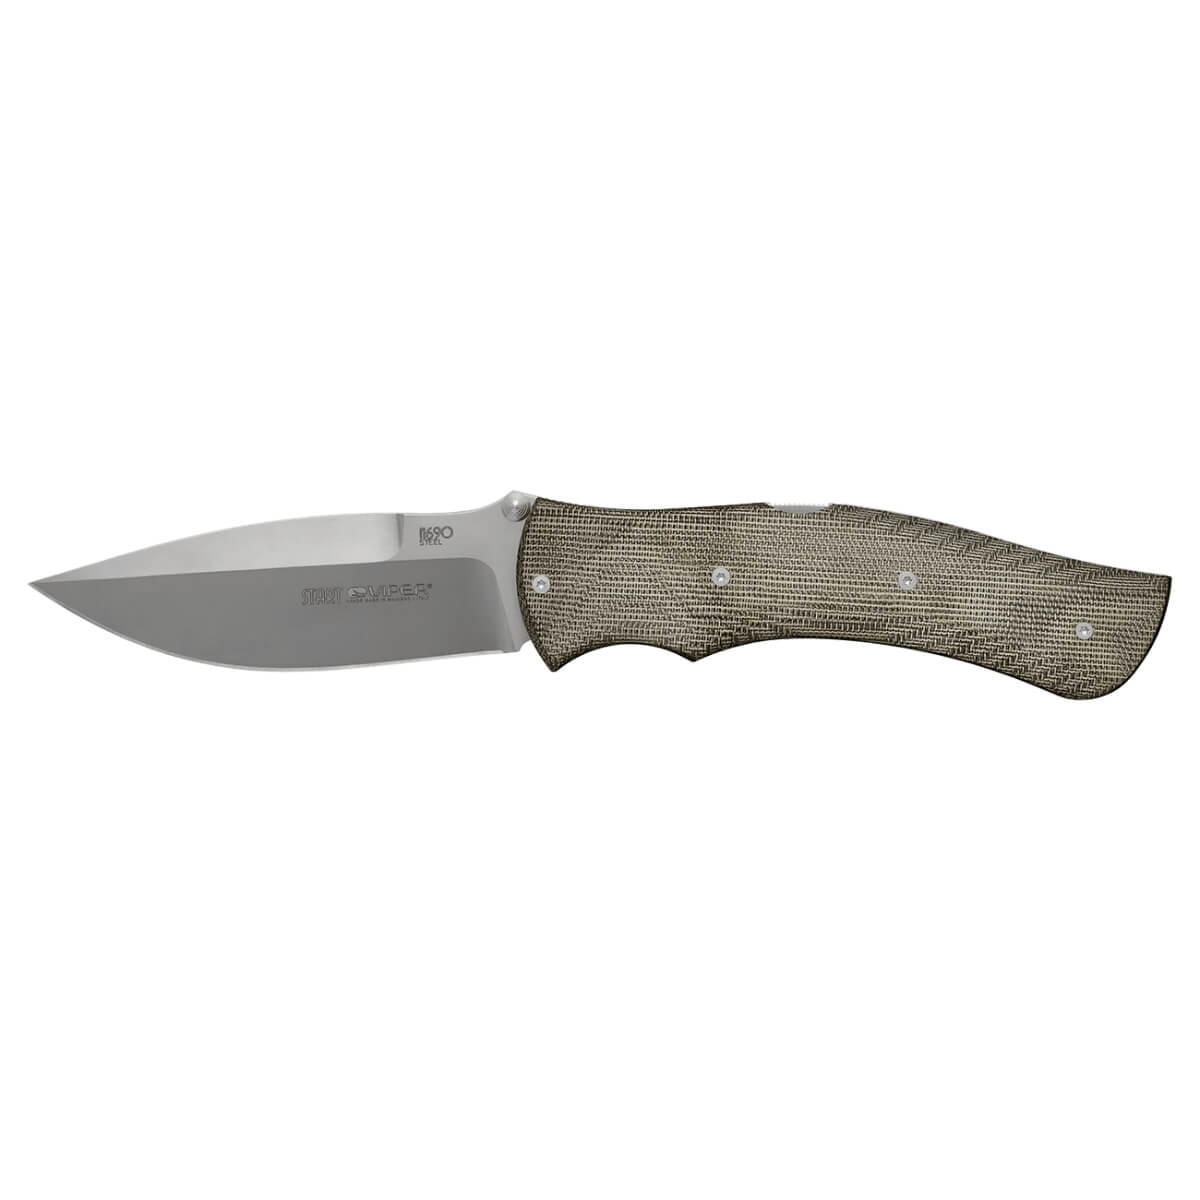 Viper Start CV Folding Knife | Canvas Micarta | Bohler N690Co Steel